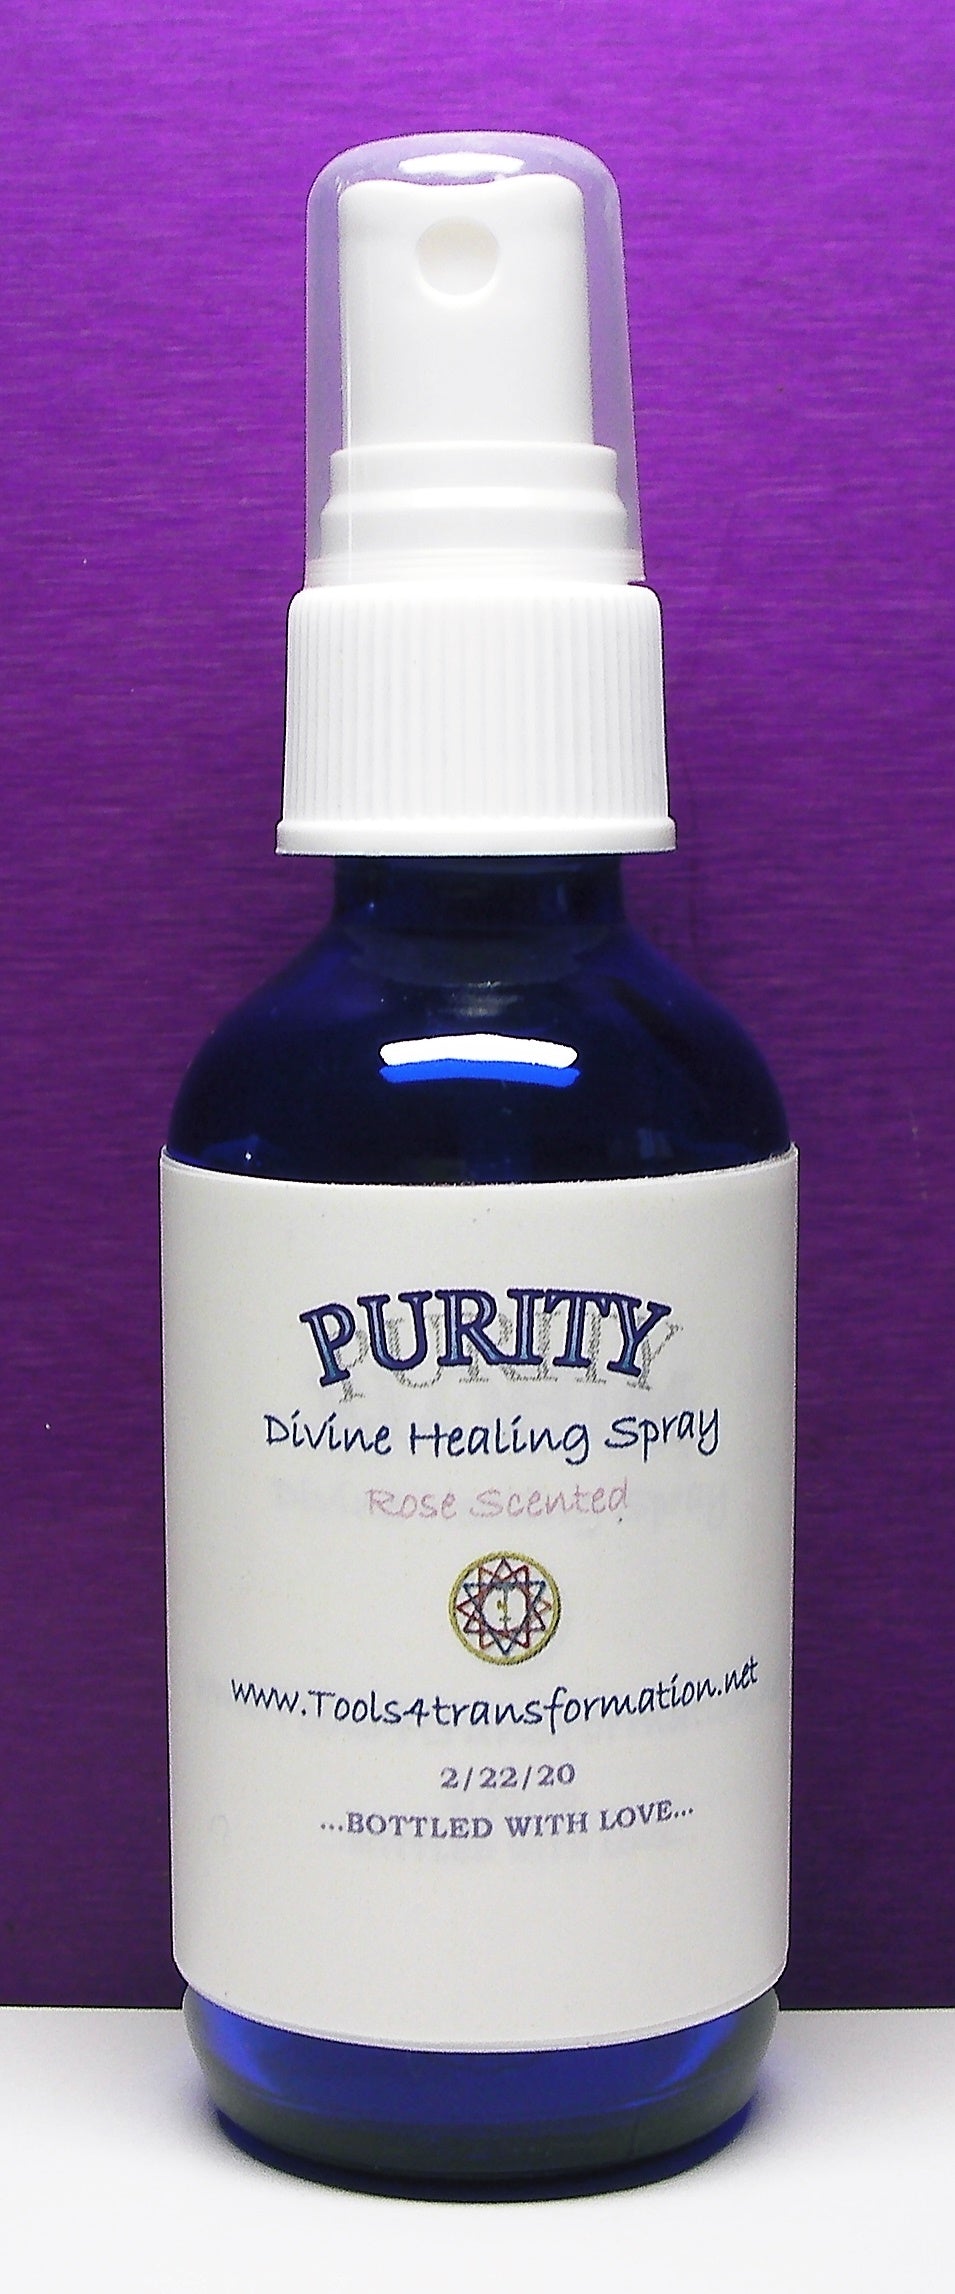 Purity Divine Healing Spray